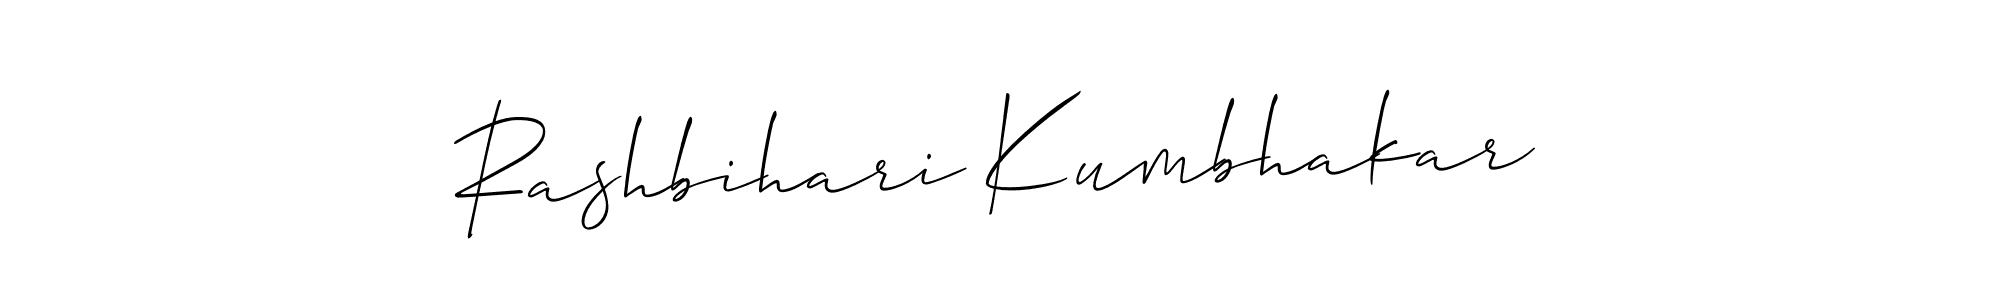 Make a beautiful signature design for name Rashbihari Kumbhakar. Use this online signature maker to create a handwritten signature for free. Rashbihari Kumbhakar signature style 2 images and pictures png